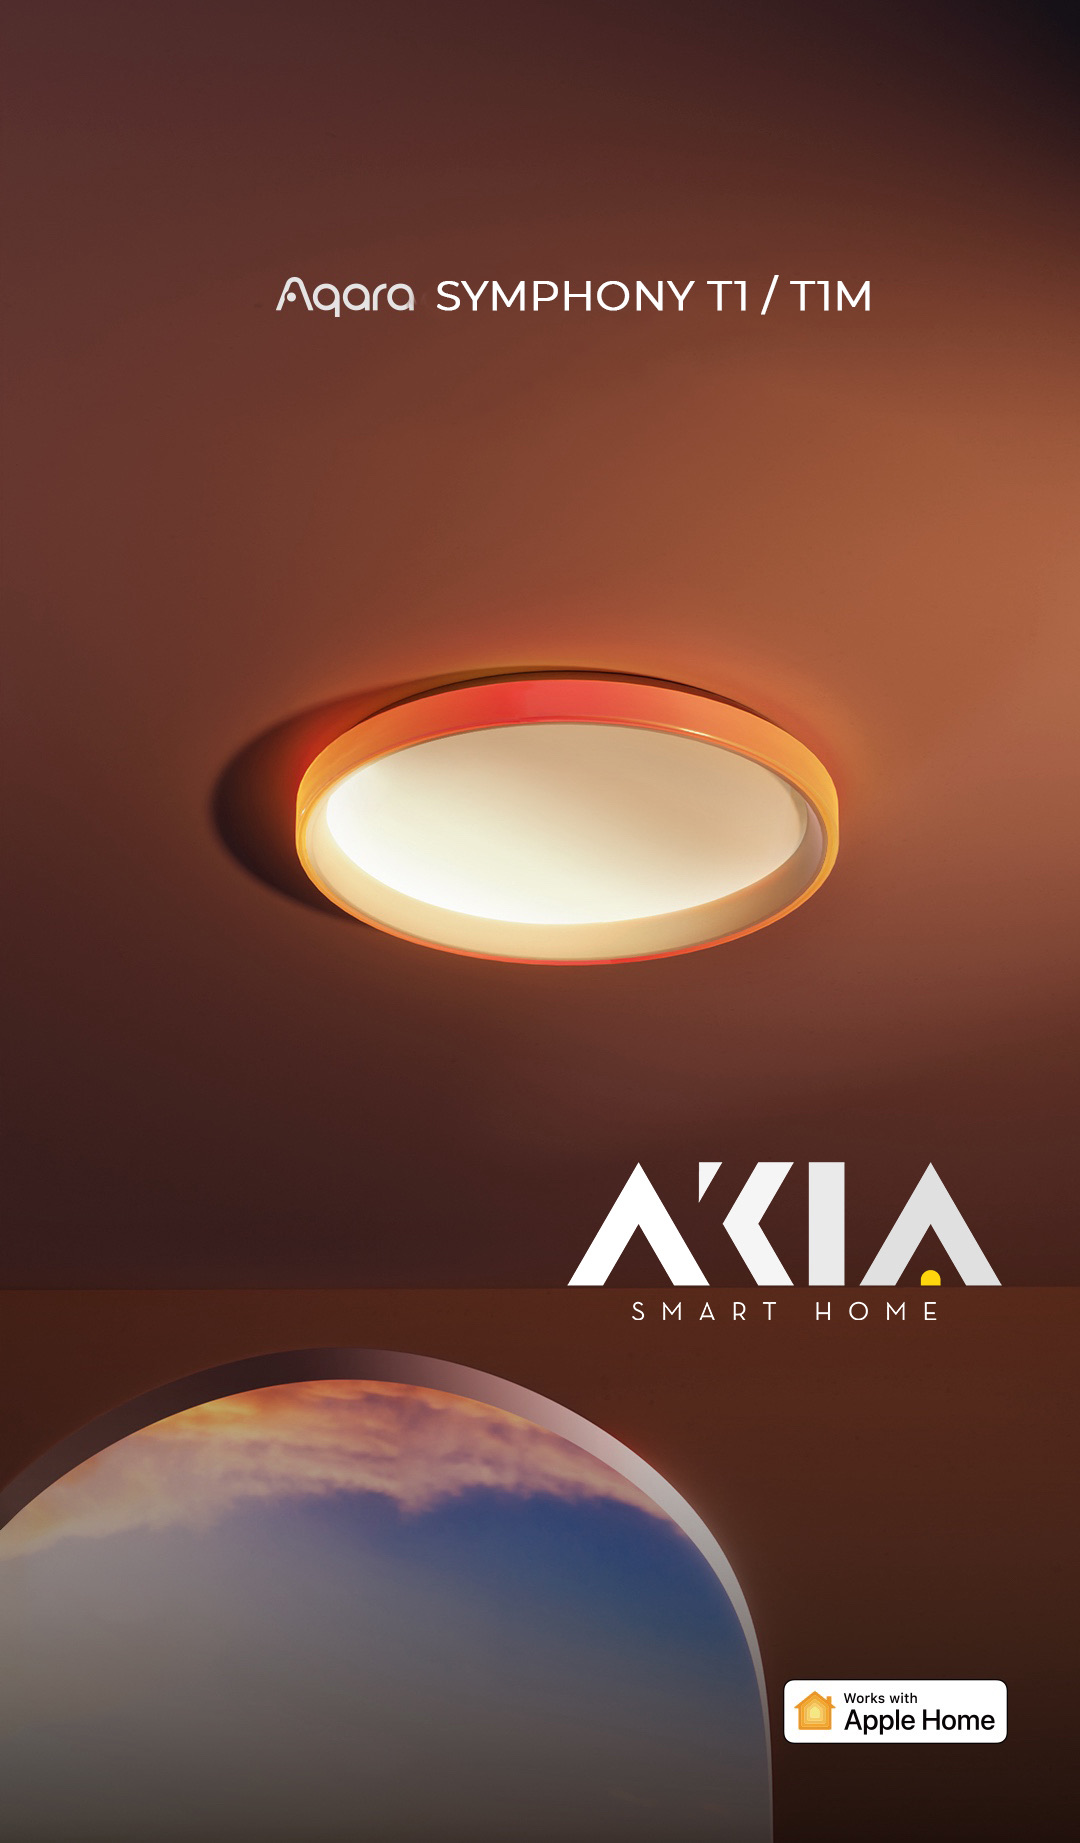 Đèn Trần Aqara Symphony T1 / T1M - Akia Smart Home